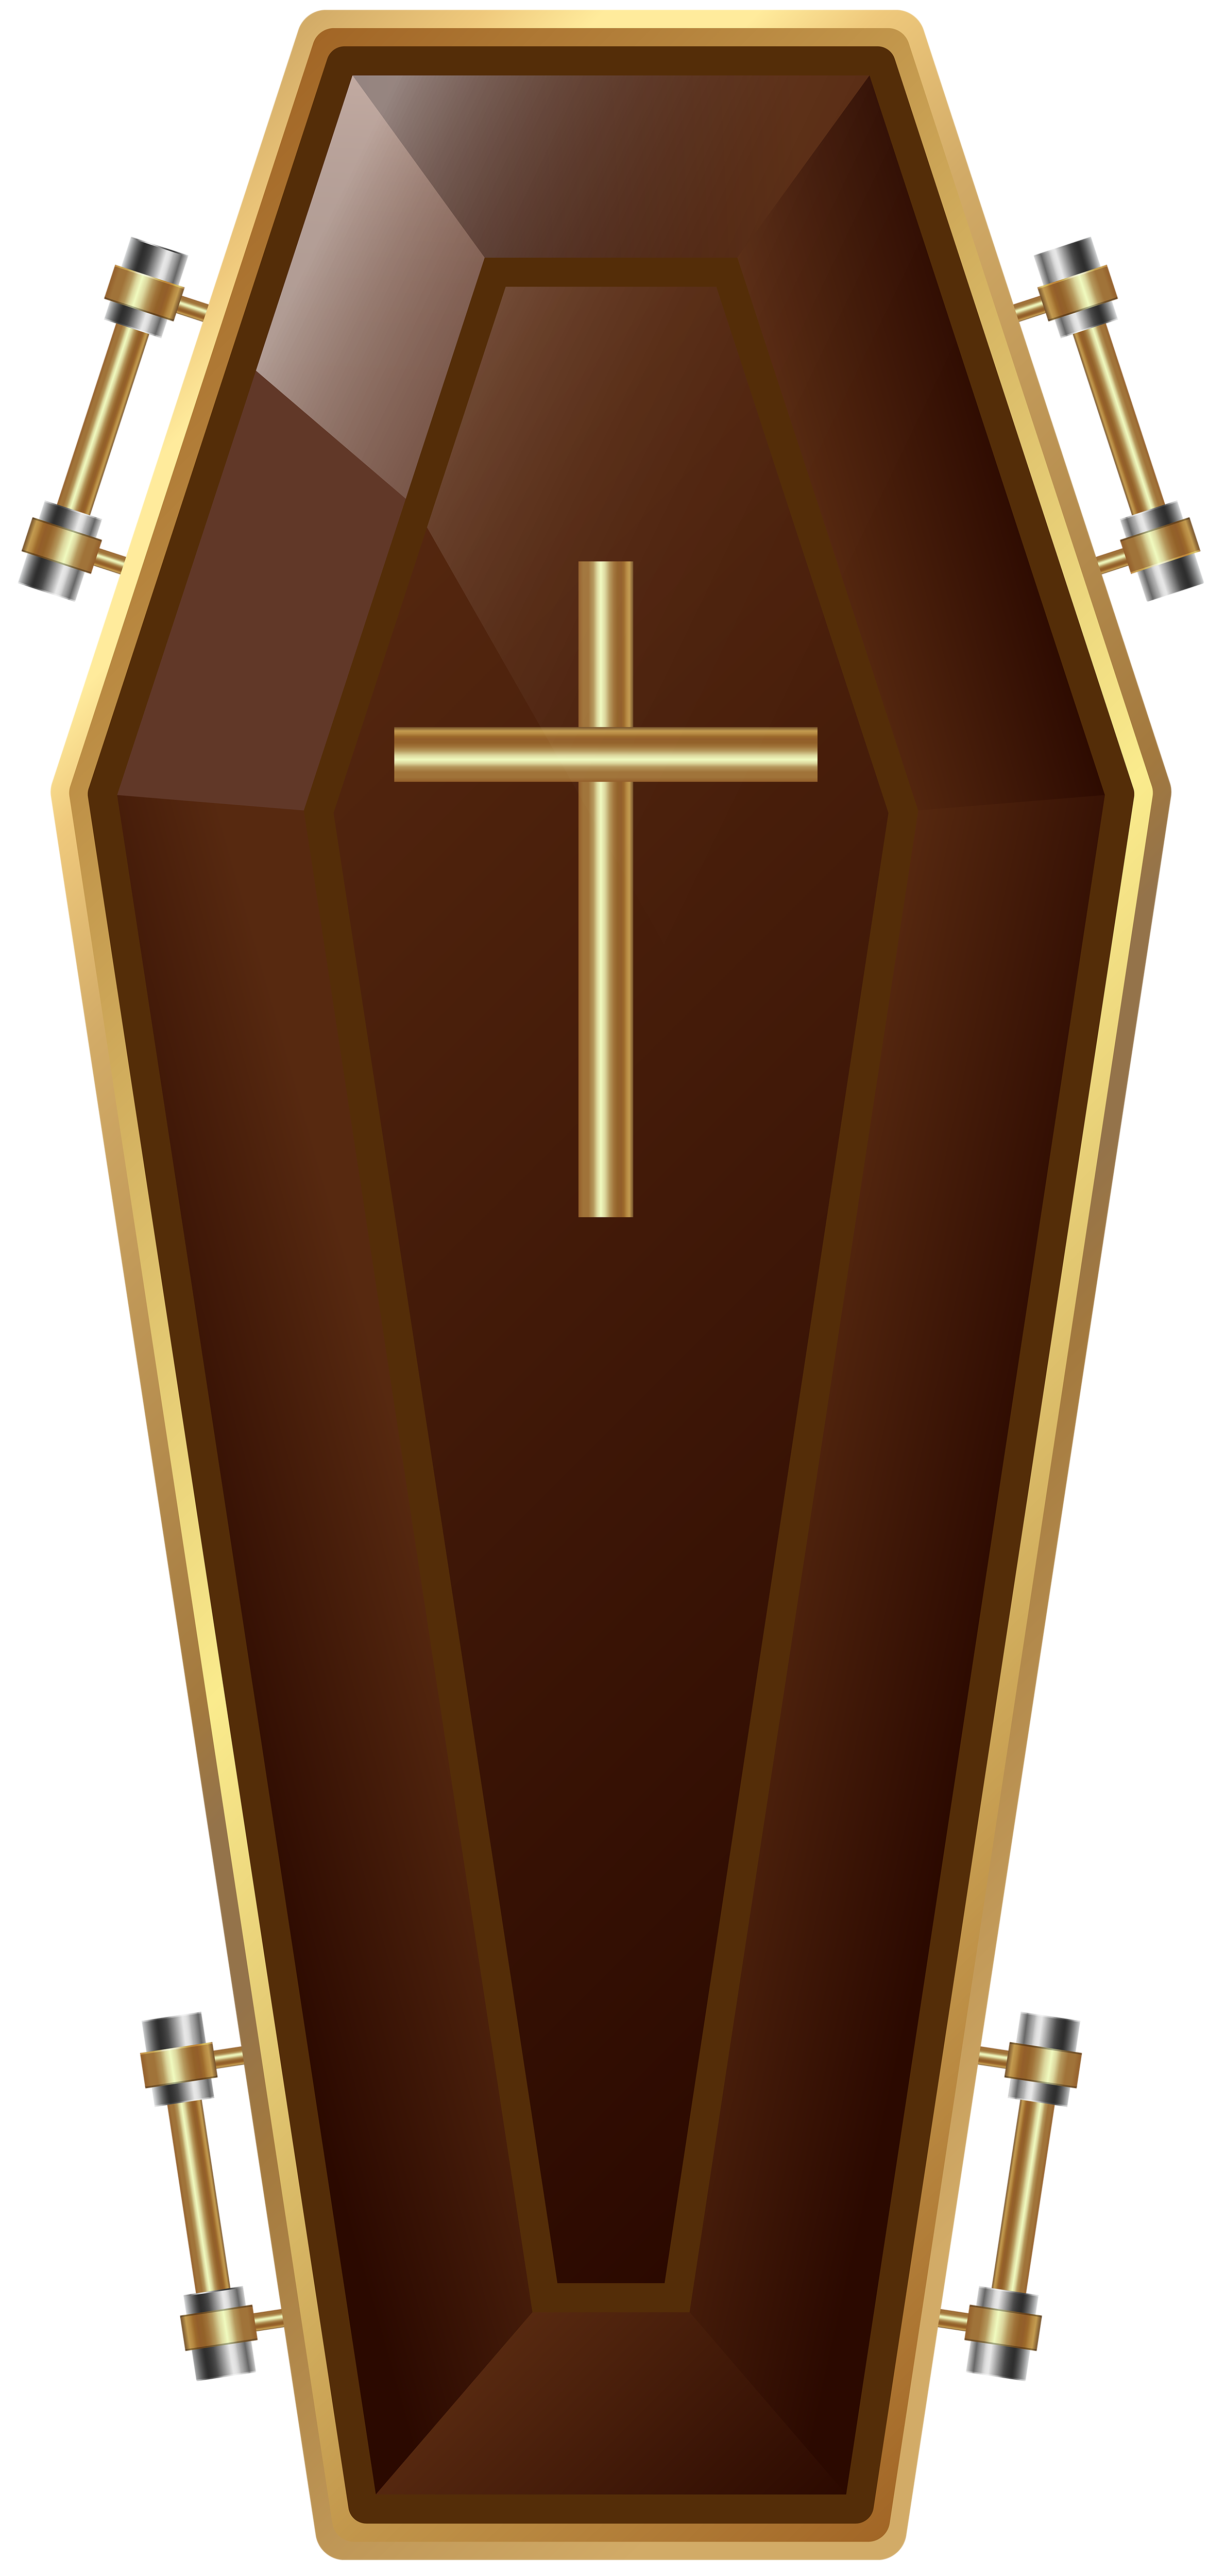 Download PNG image - Wooden Coffin PNG Transparent Image 